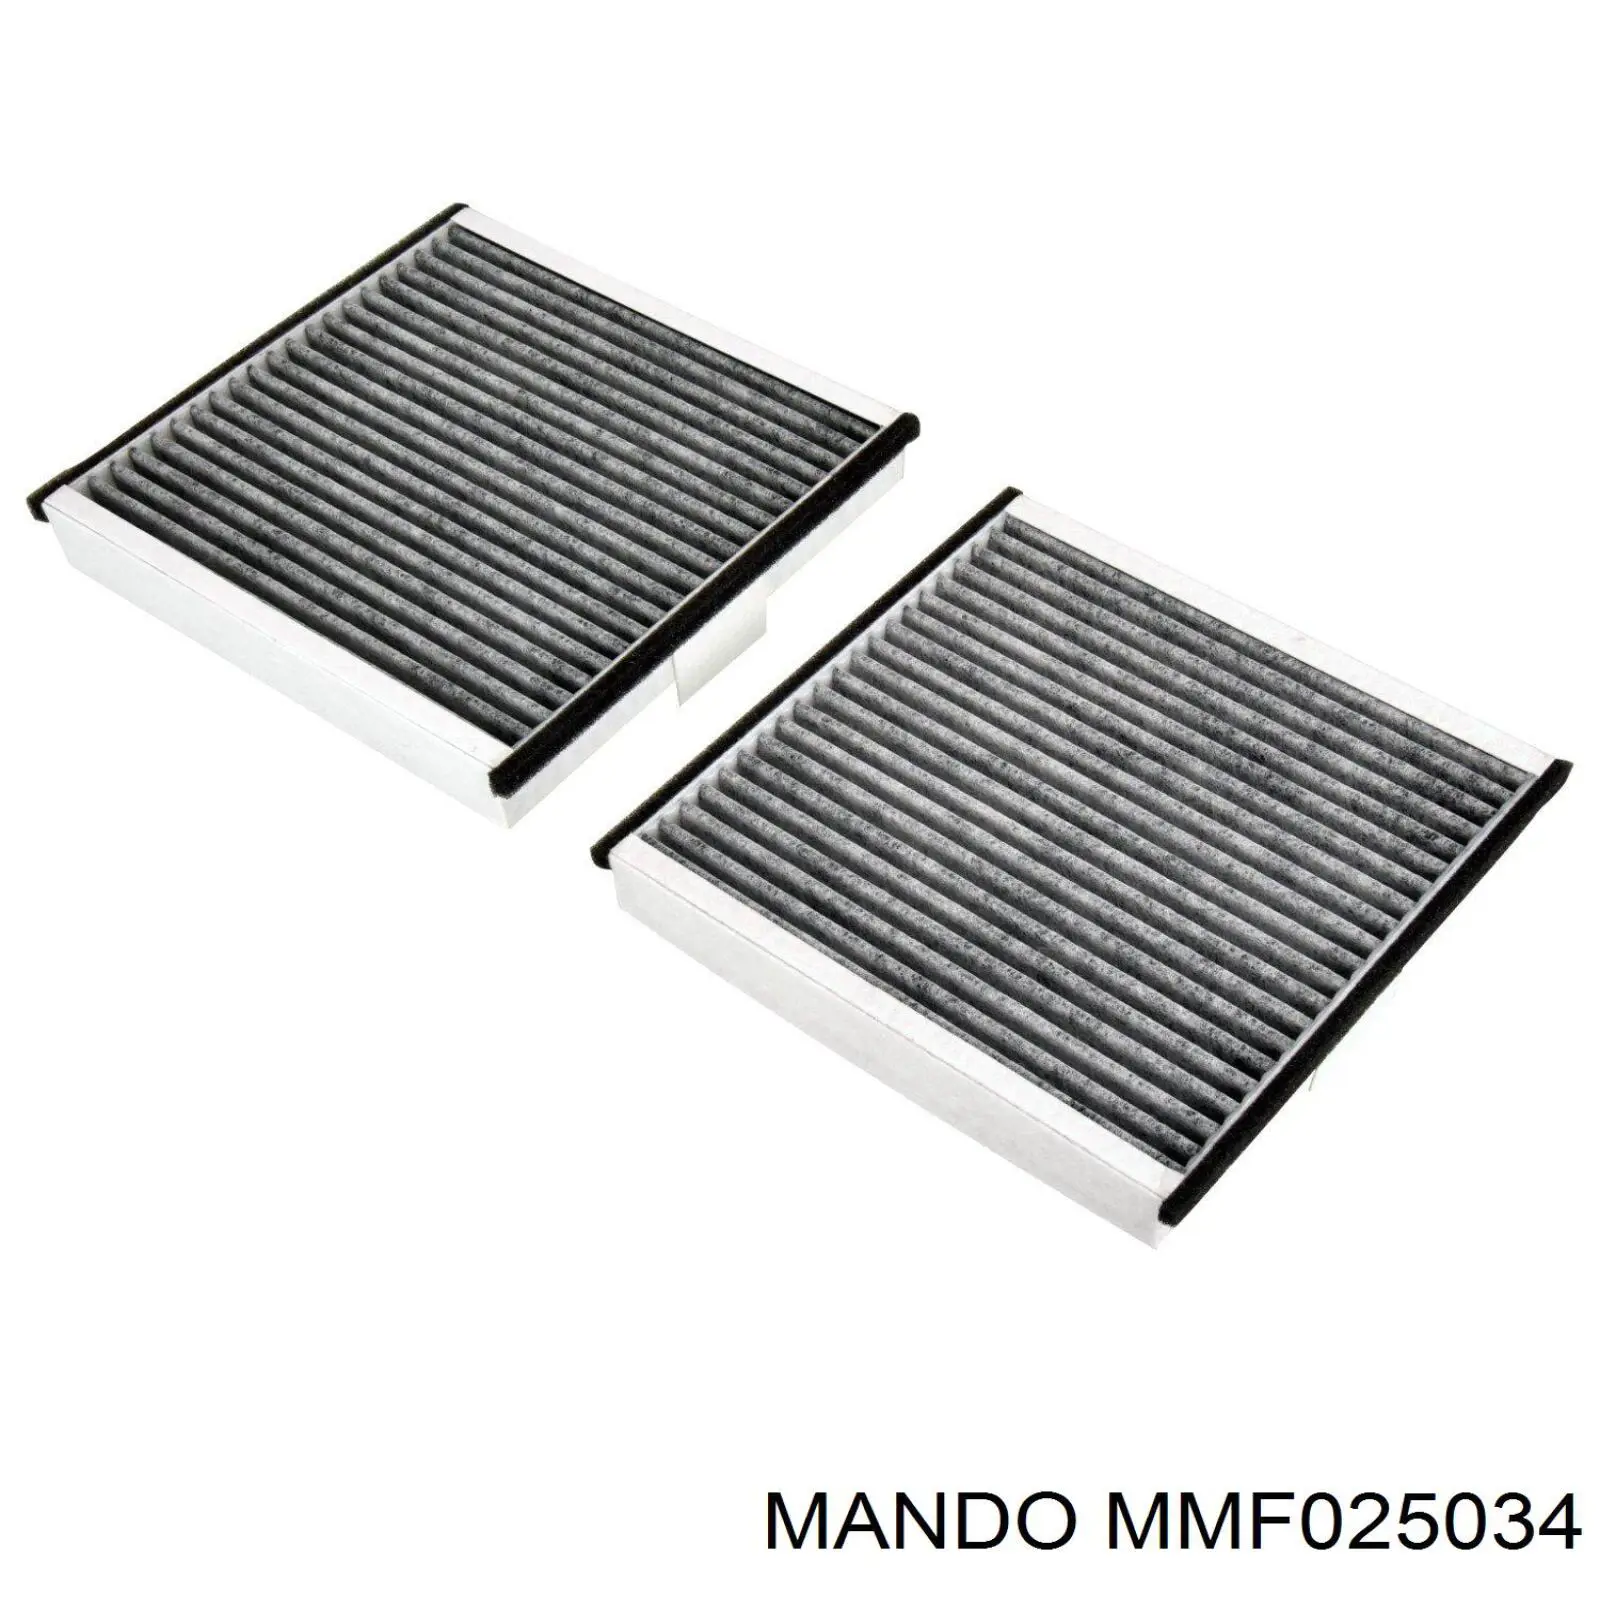 MMF025034 Mando фильтр салона